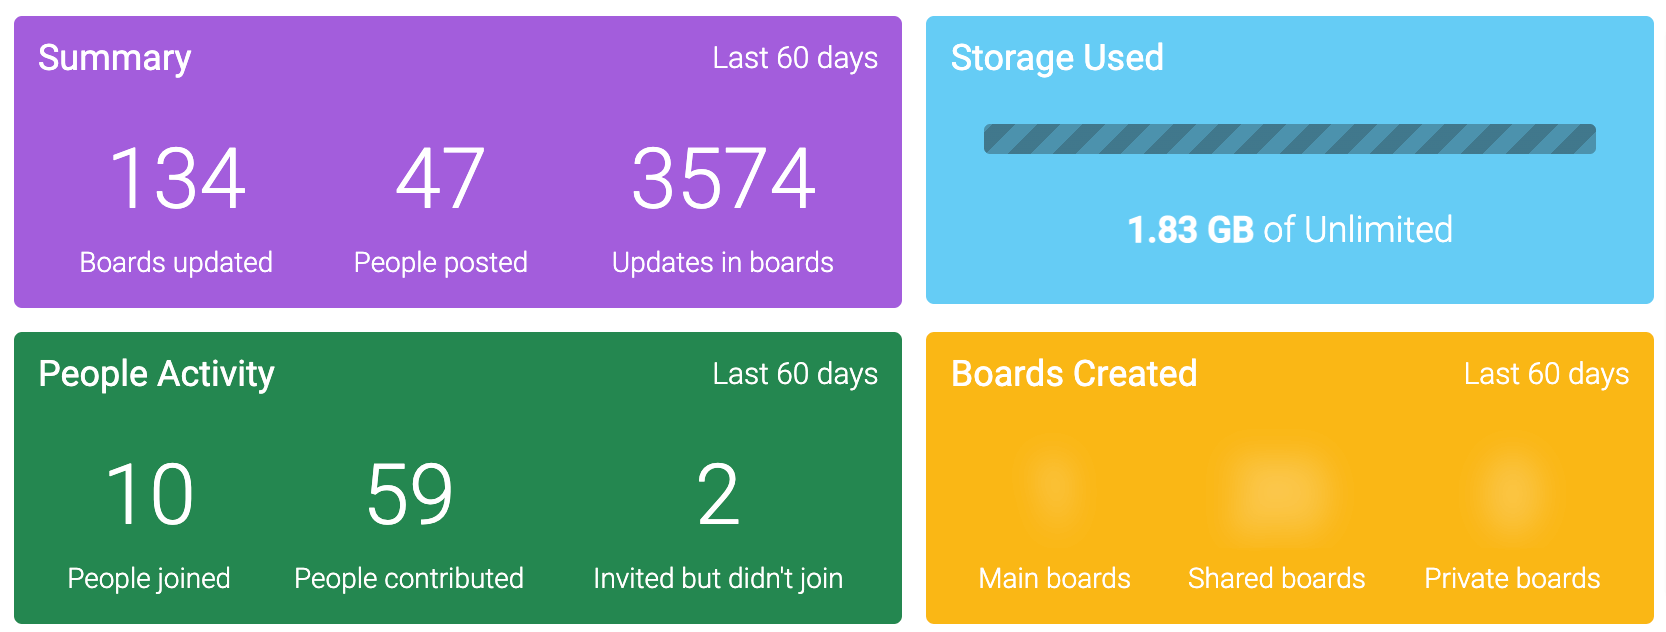 Monday.com - Serpact stats past 60 days